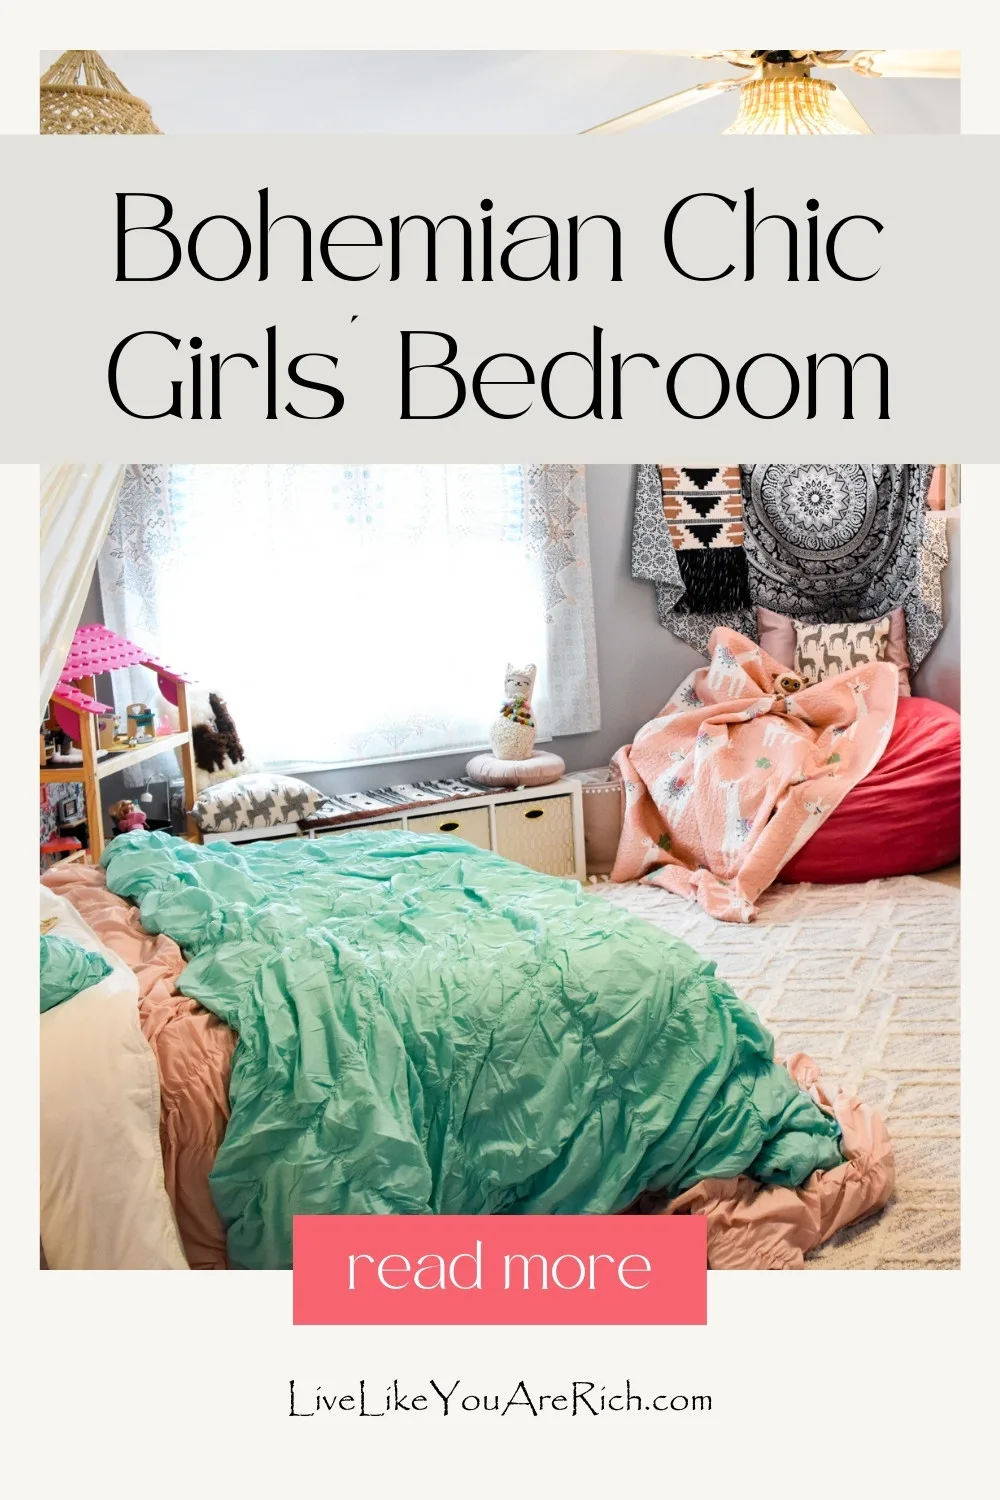 Bohemian Chic Girls' Bedroom